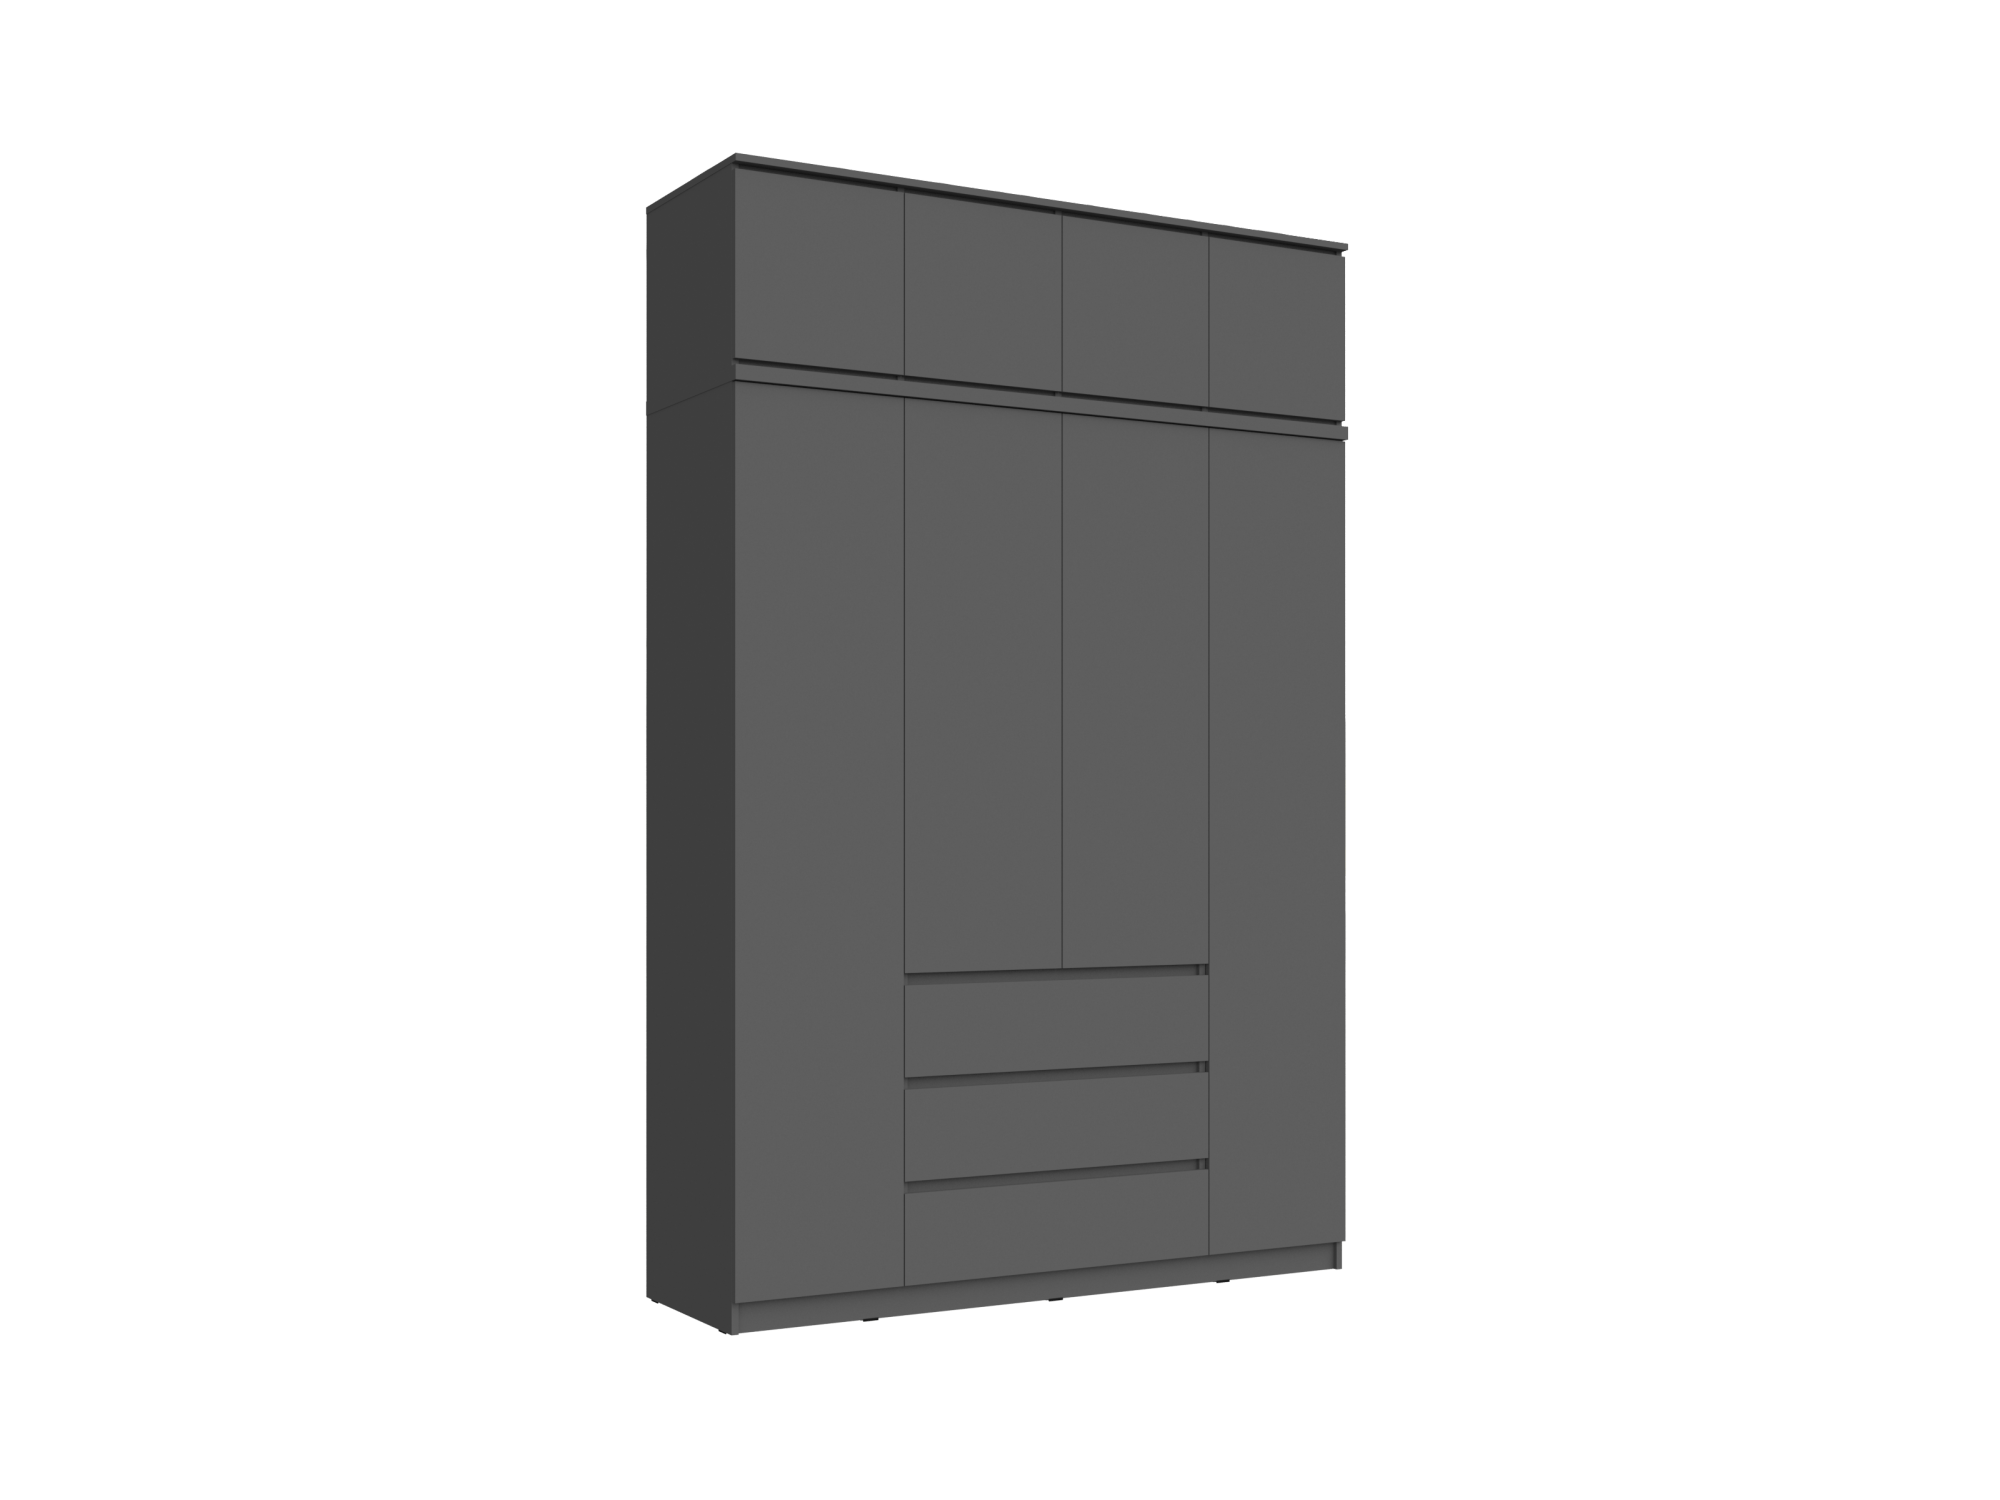 Челси Шкаф 1600 + антресоль 1600 (Графит, Графит) Черный, ЛДСП челси шкаф 2 х створчатый платяной антресоль к шкафу 800 графит графит графит черный лдсп